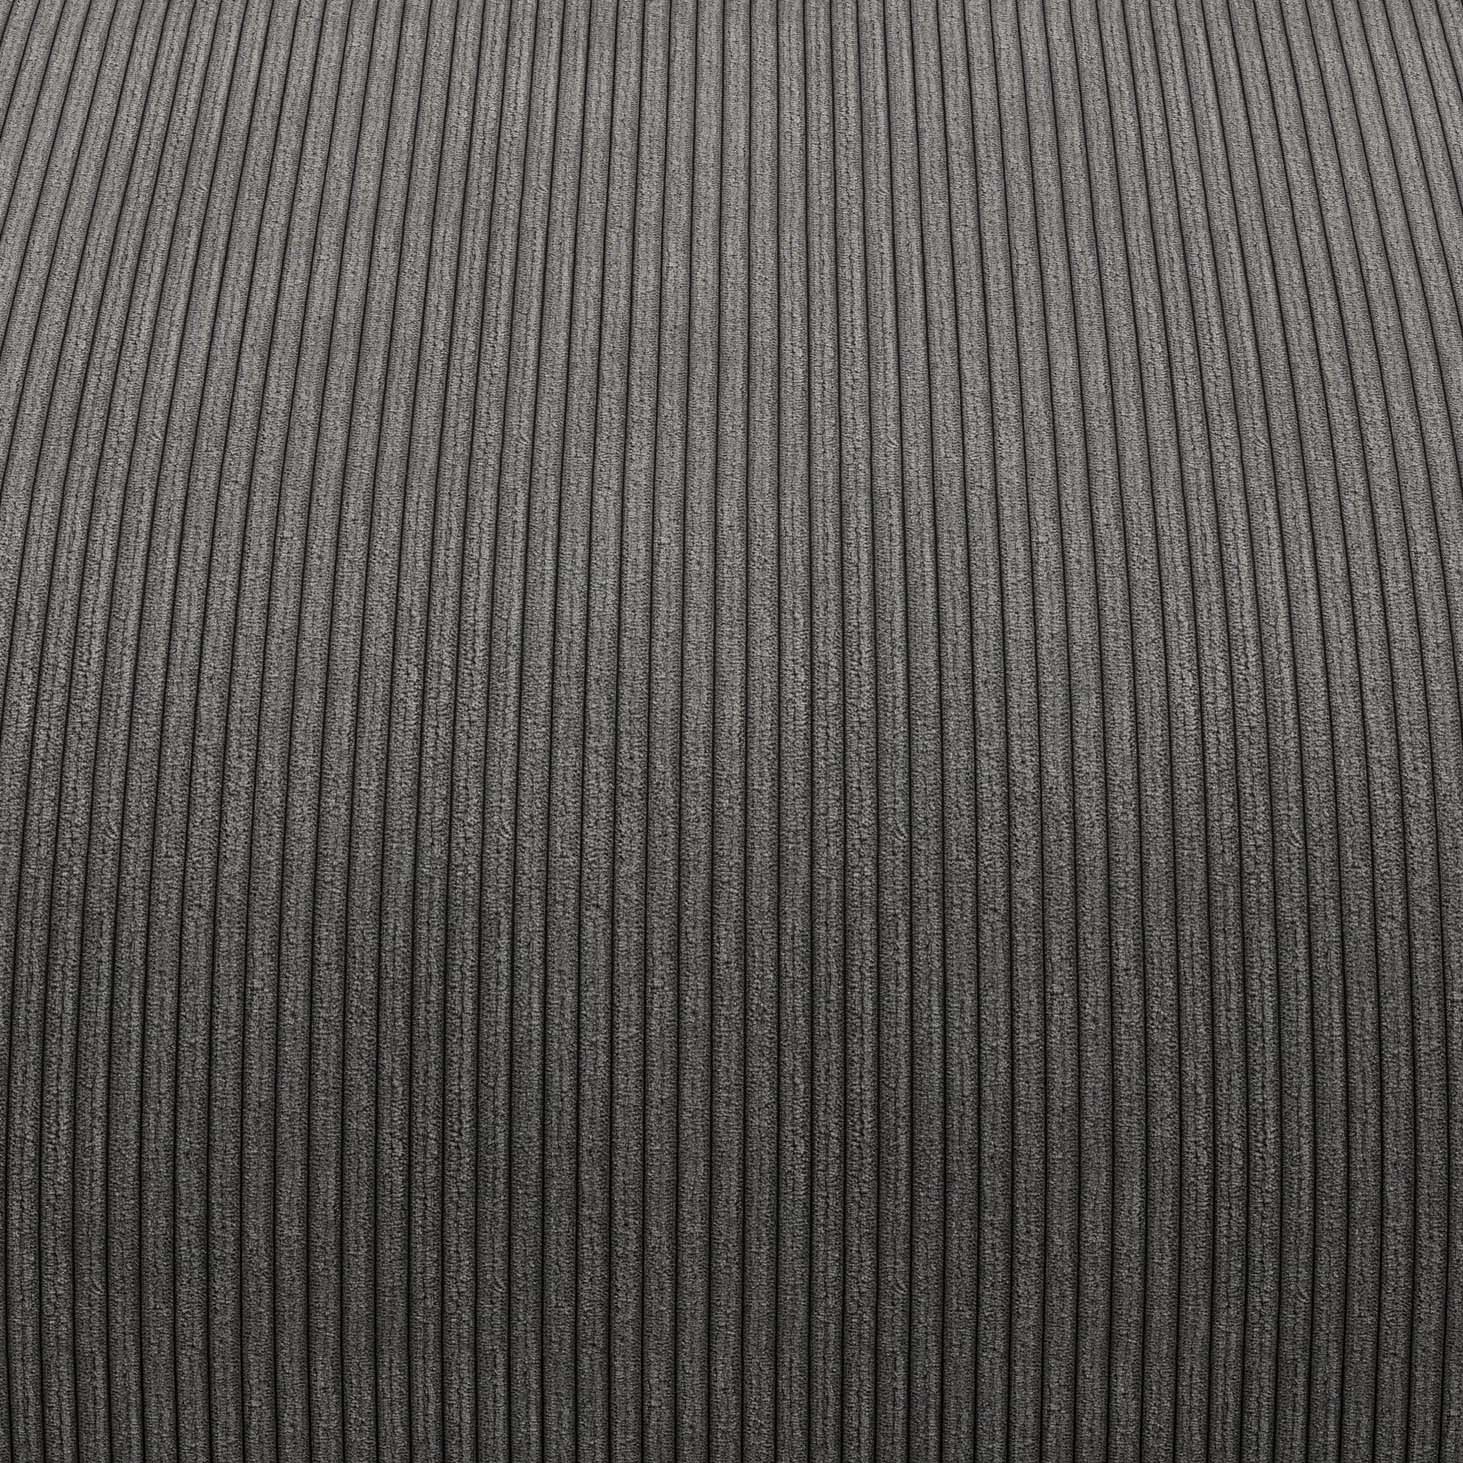 Two Seat Sofa S Cord Velours Dark Grey